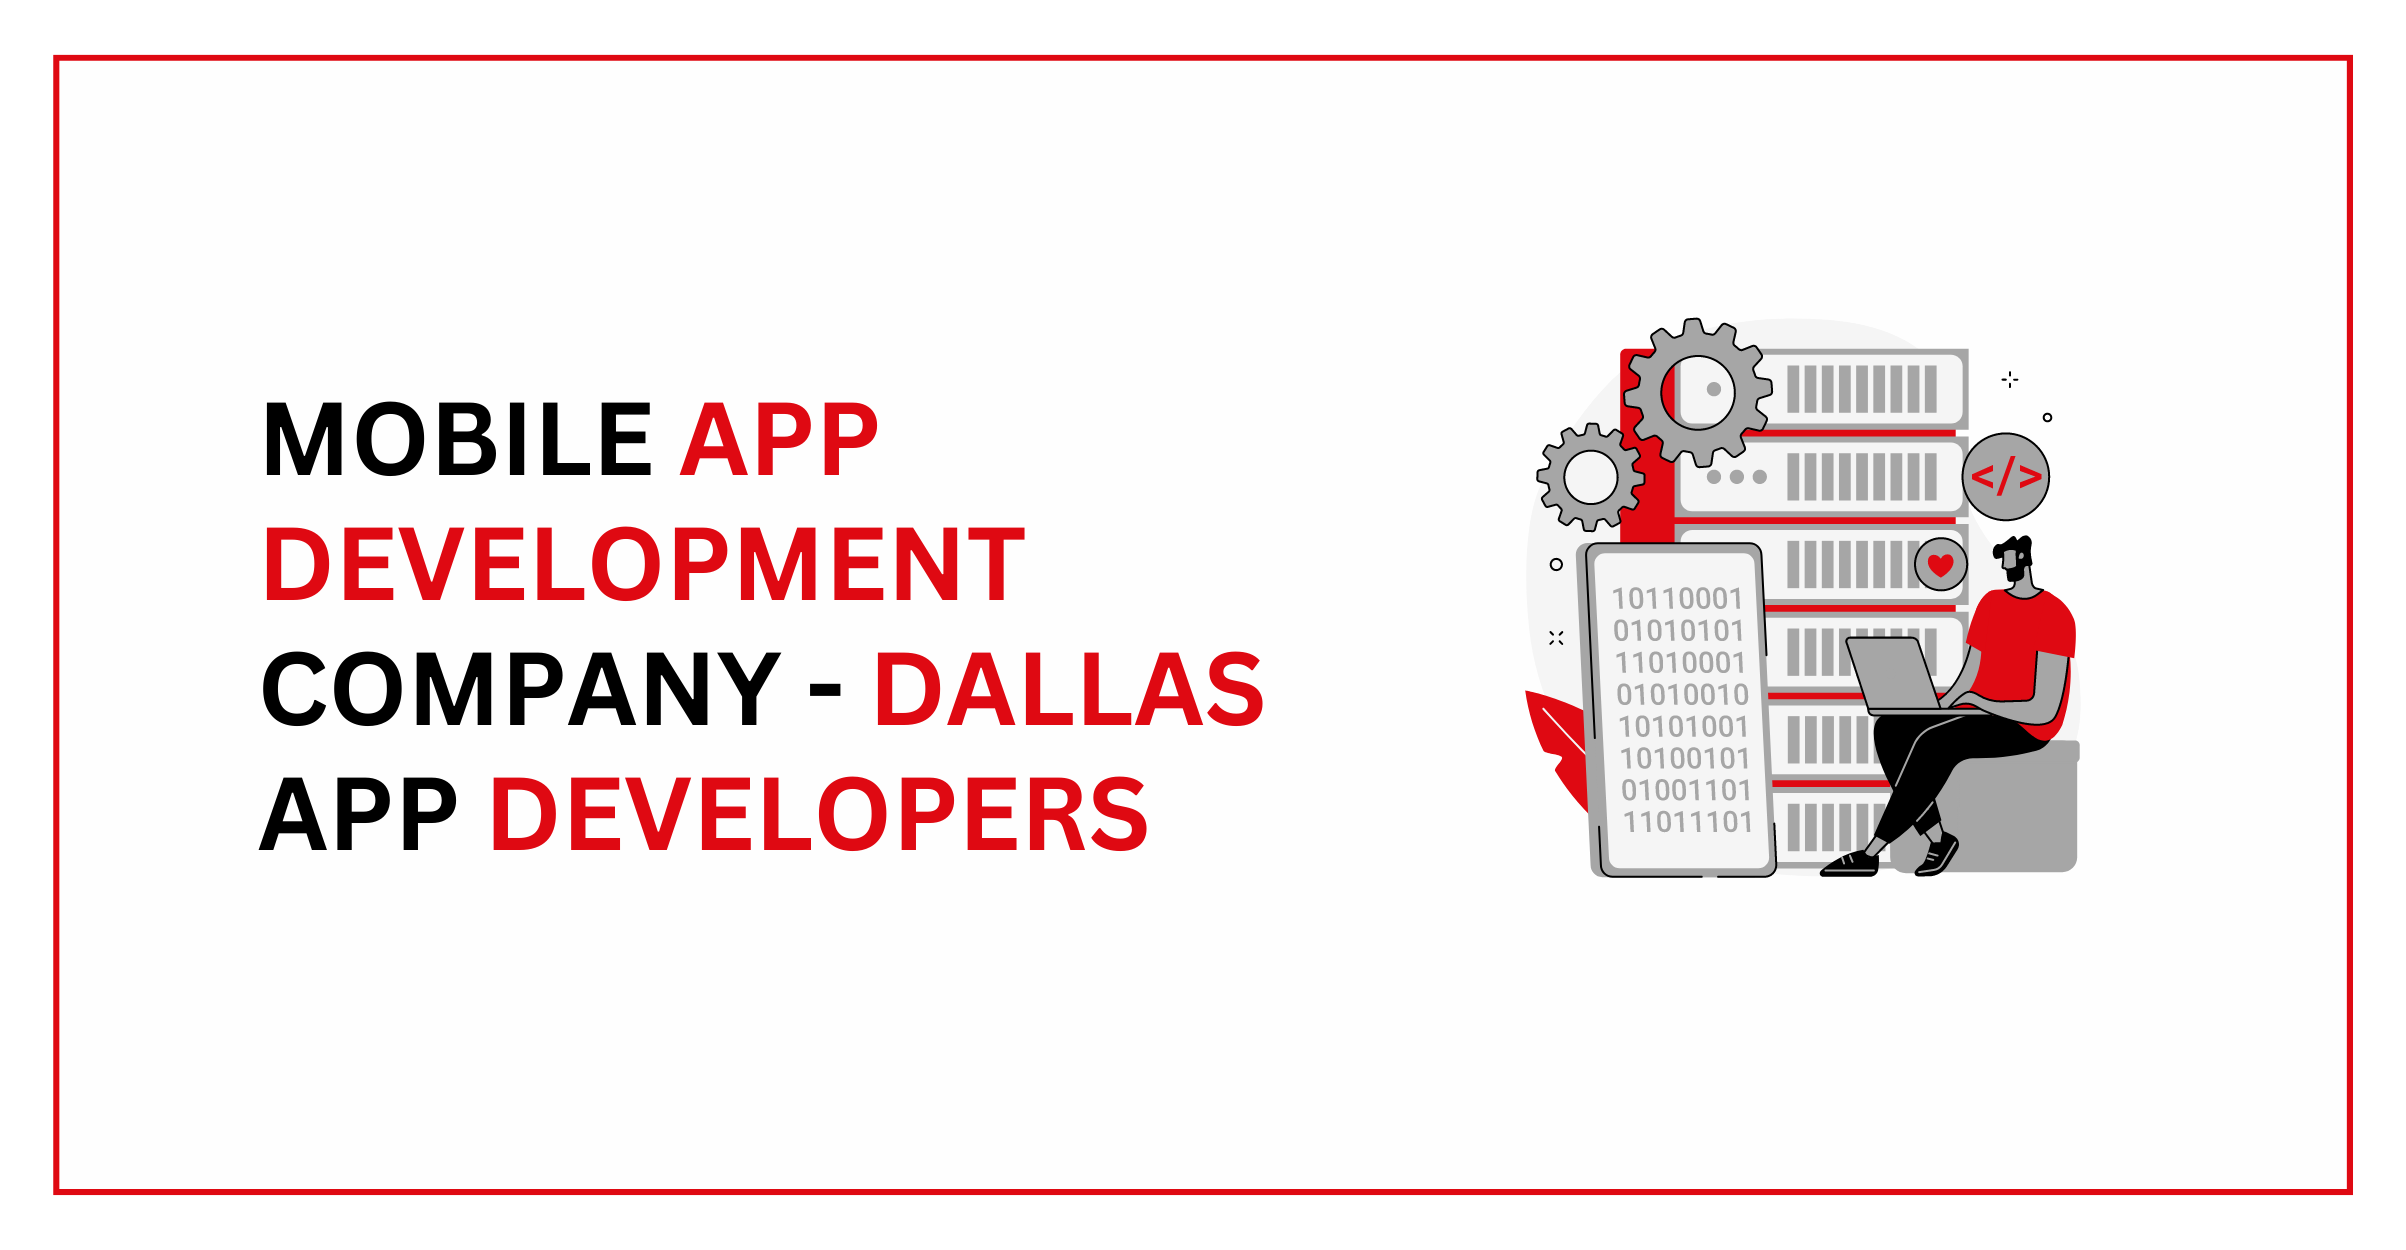 Dallas app developers